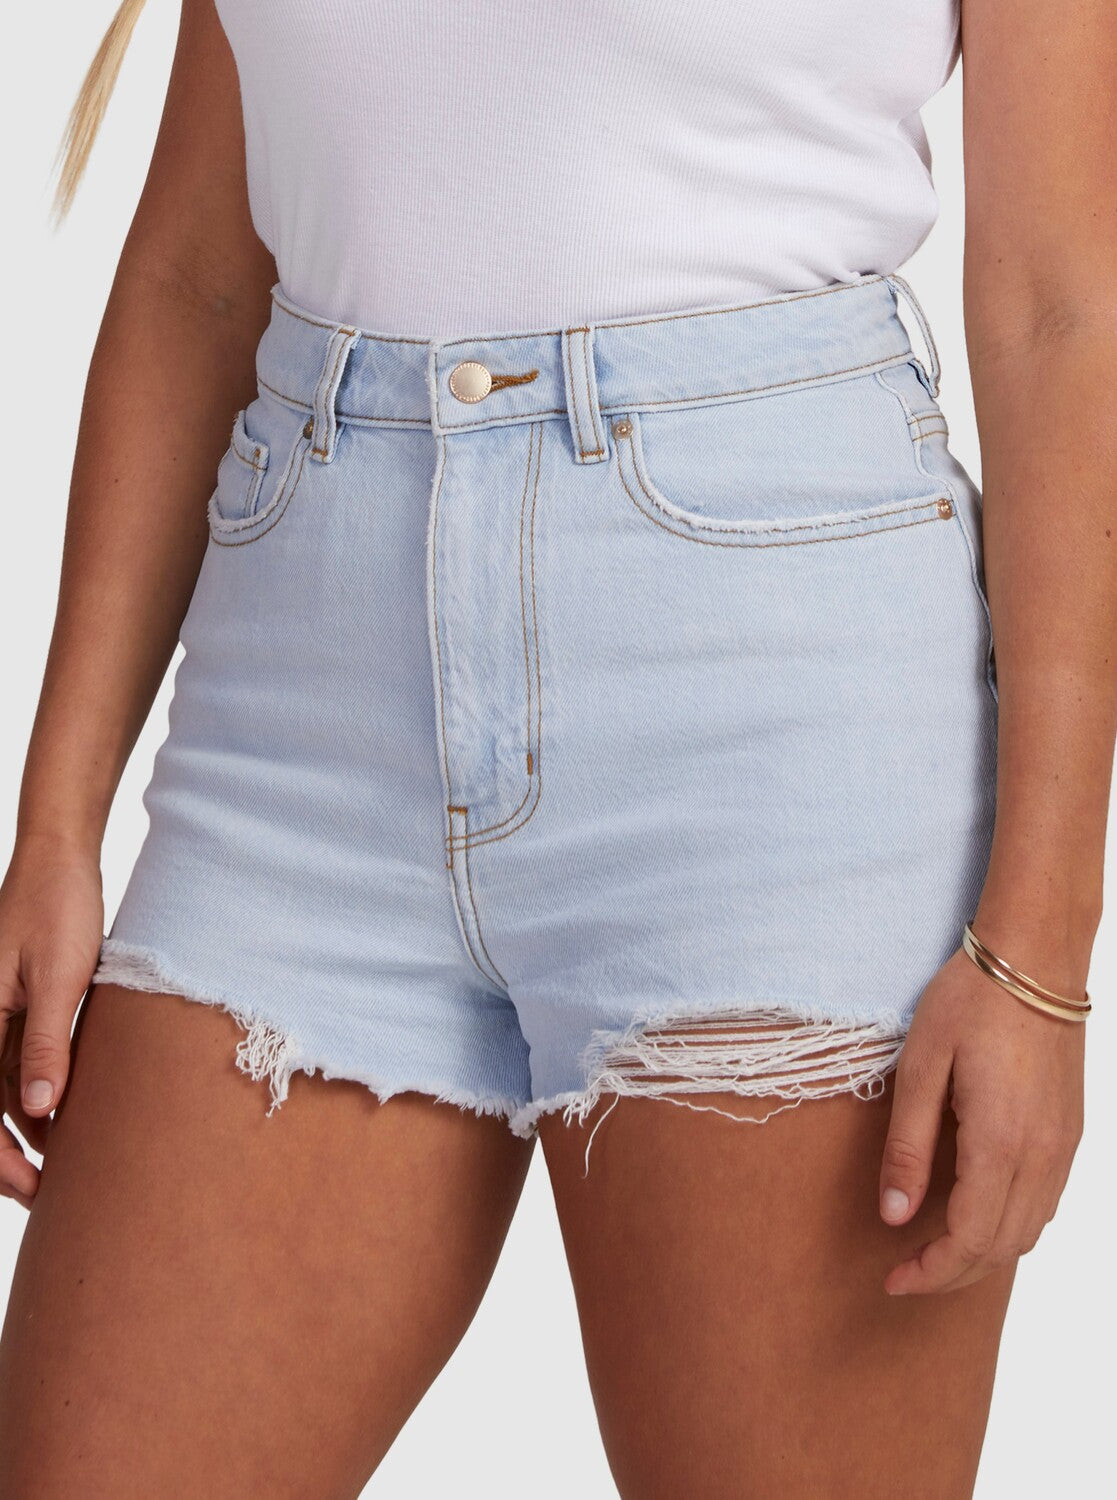 Jean Shorts for Women Washed High Waisted Frayed Raw Hem Wide Leg Denim  Shorts Casual Loose Distressed Summer Shorts - Walmart.com